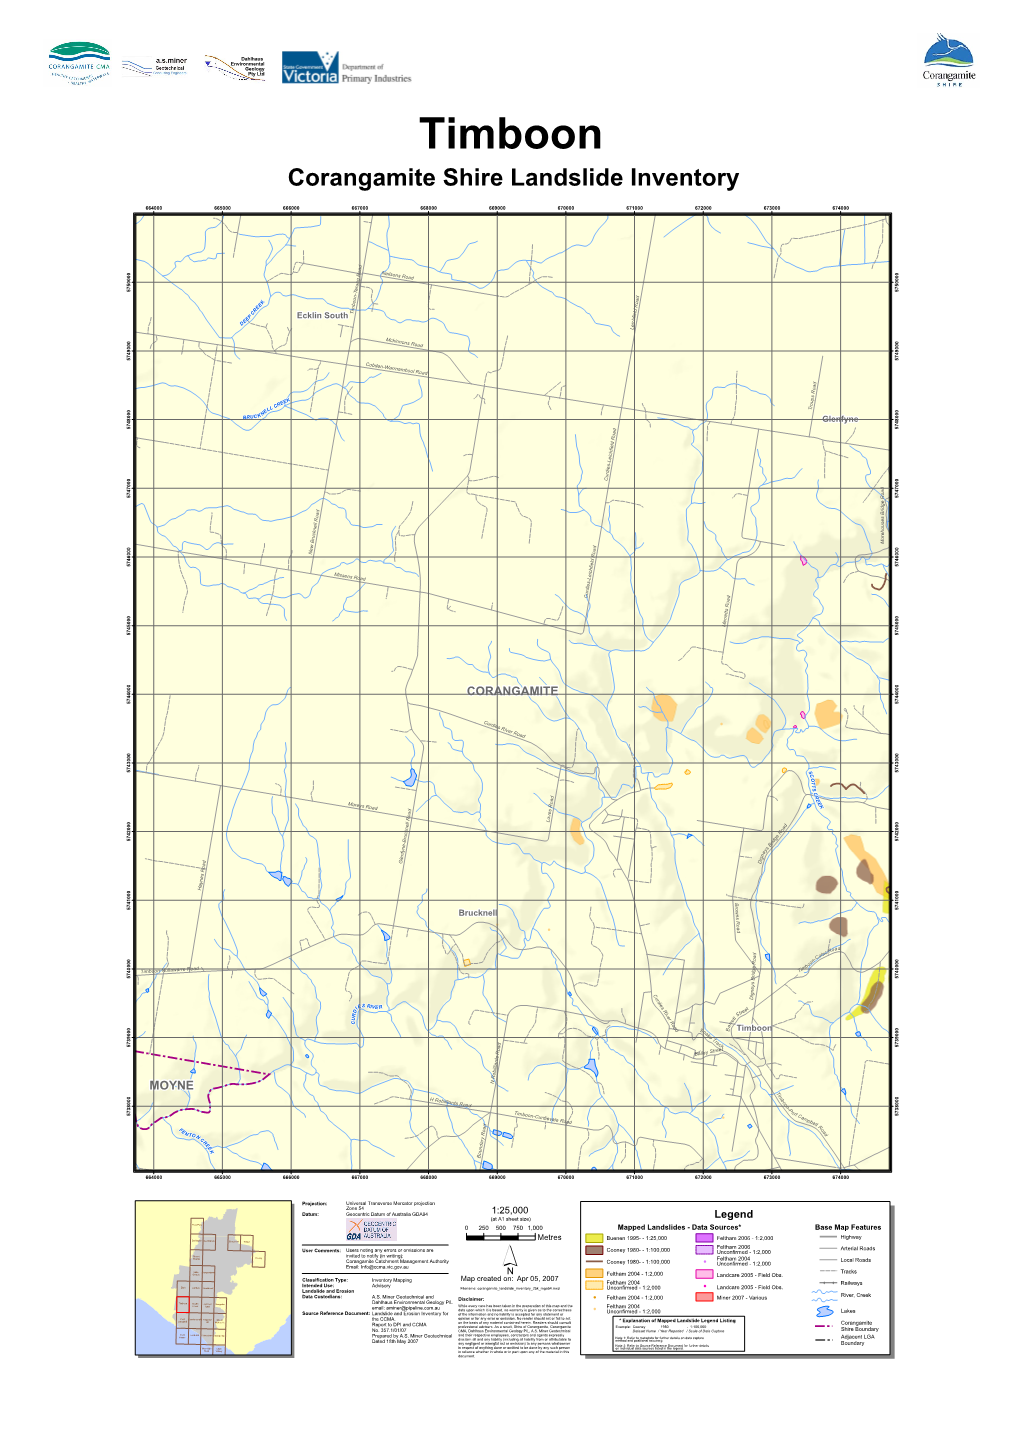 Corangamite Shire Landslide Inventory